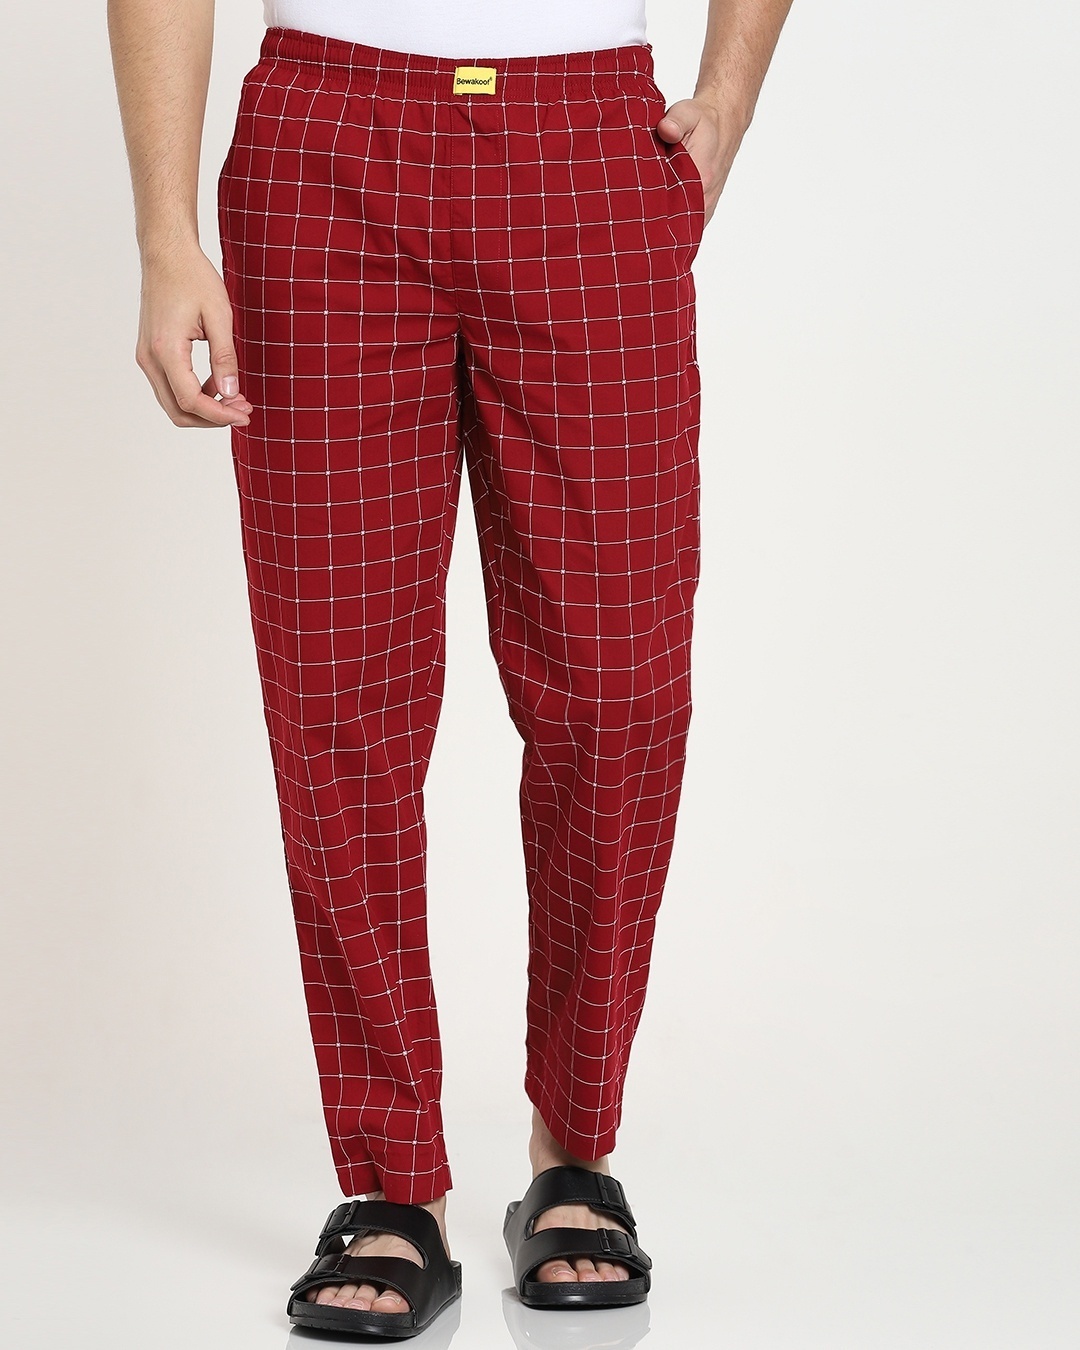 Shop Red Printed Check Pyjama-Front